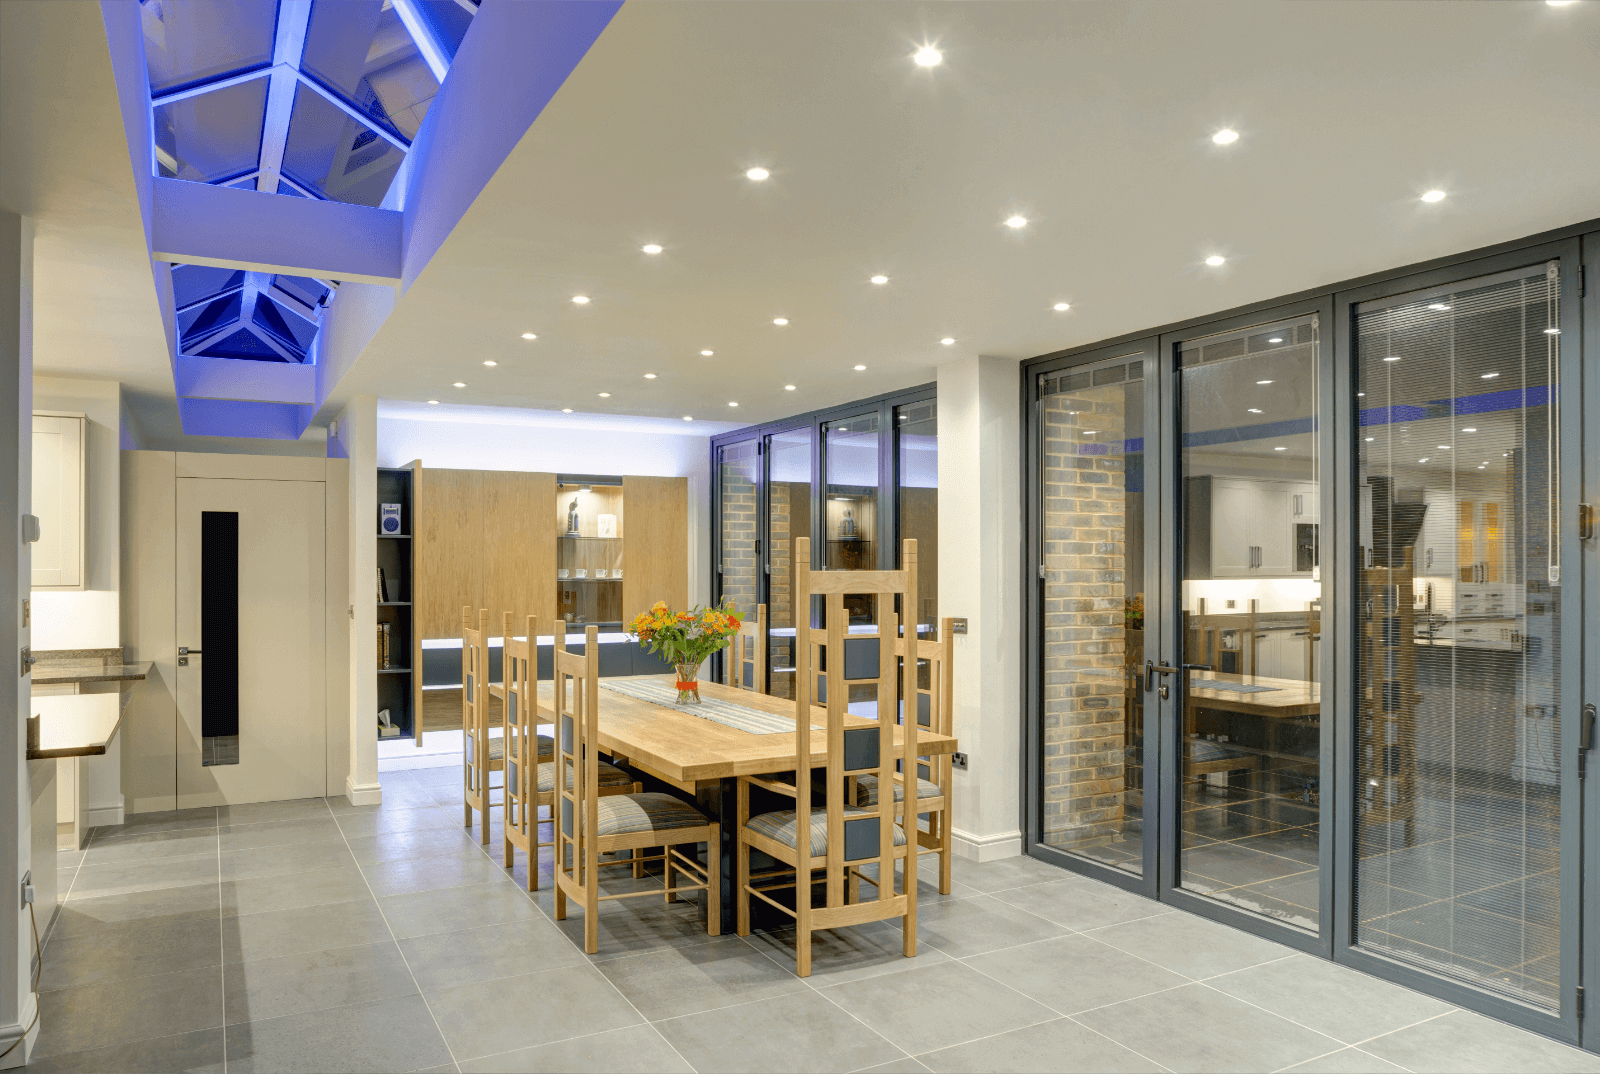 Dining area design - Goodall Design